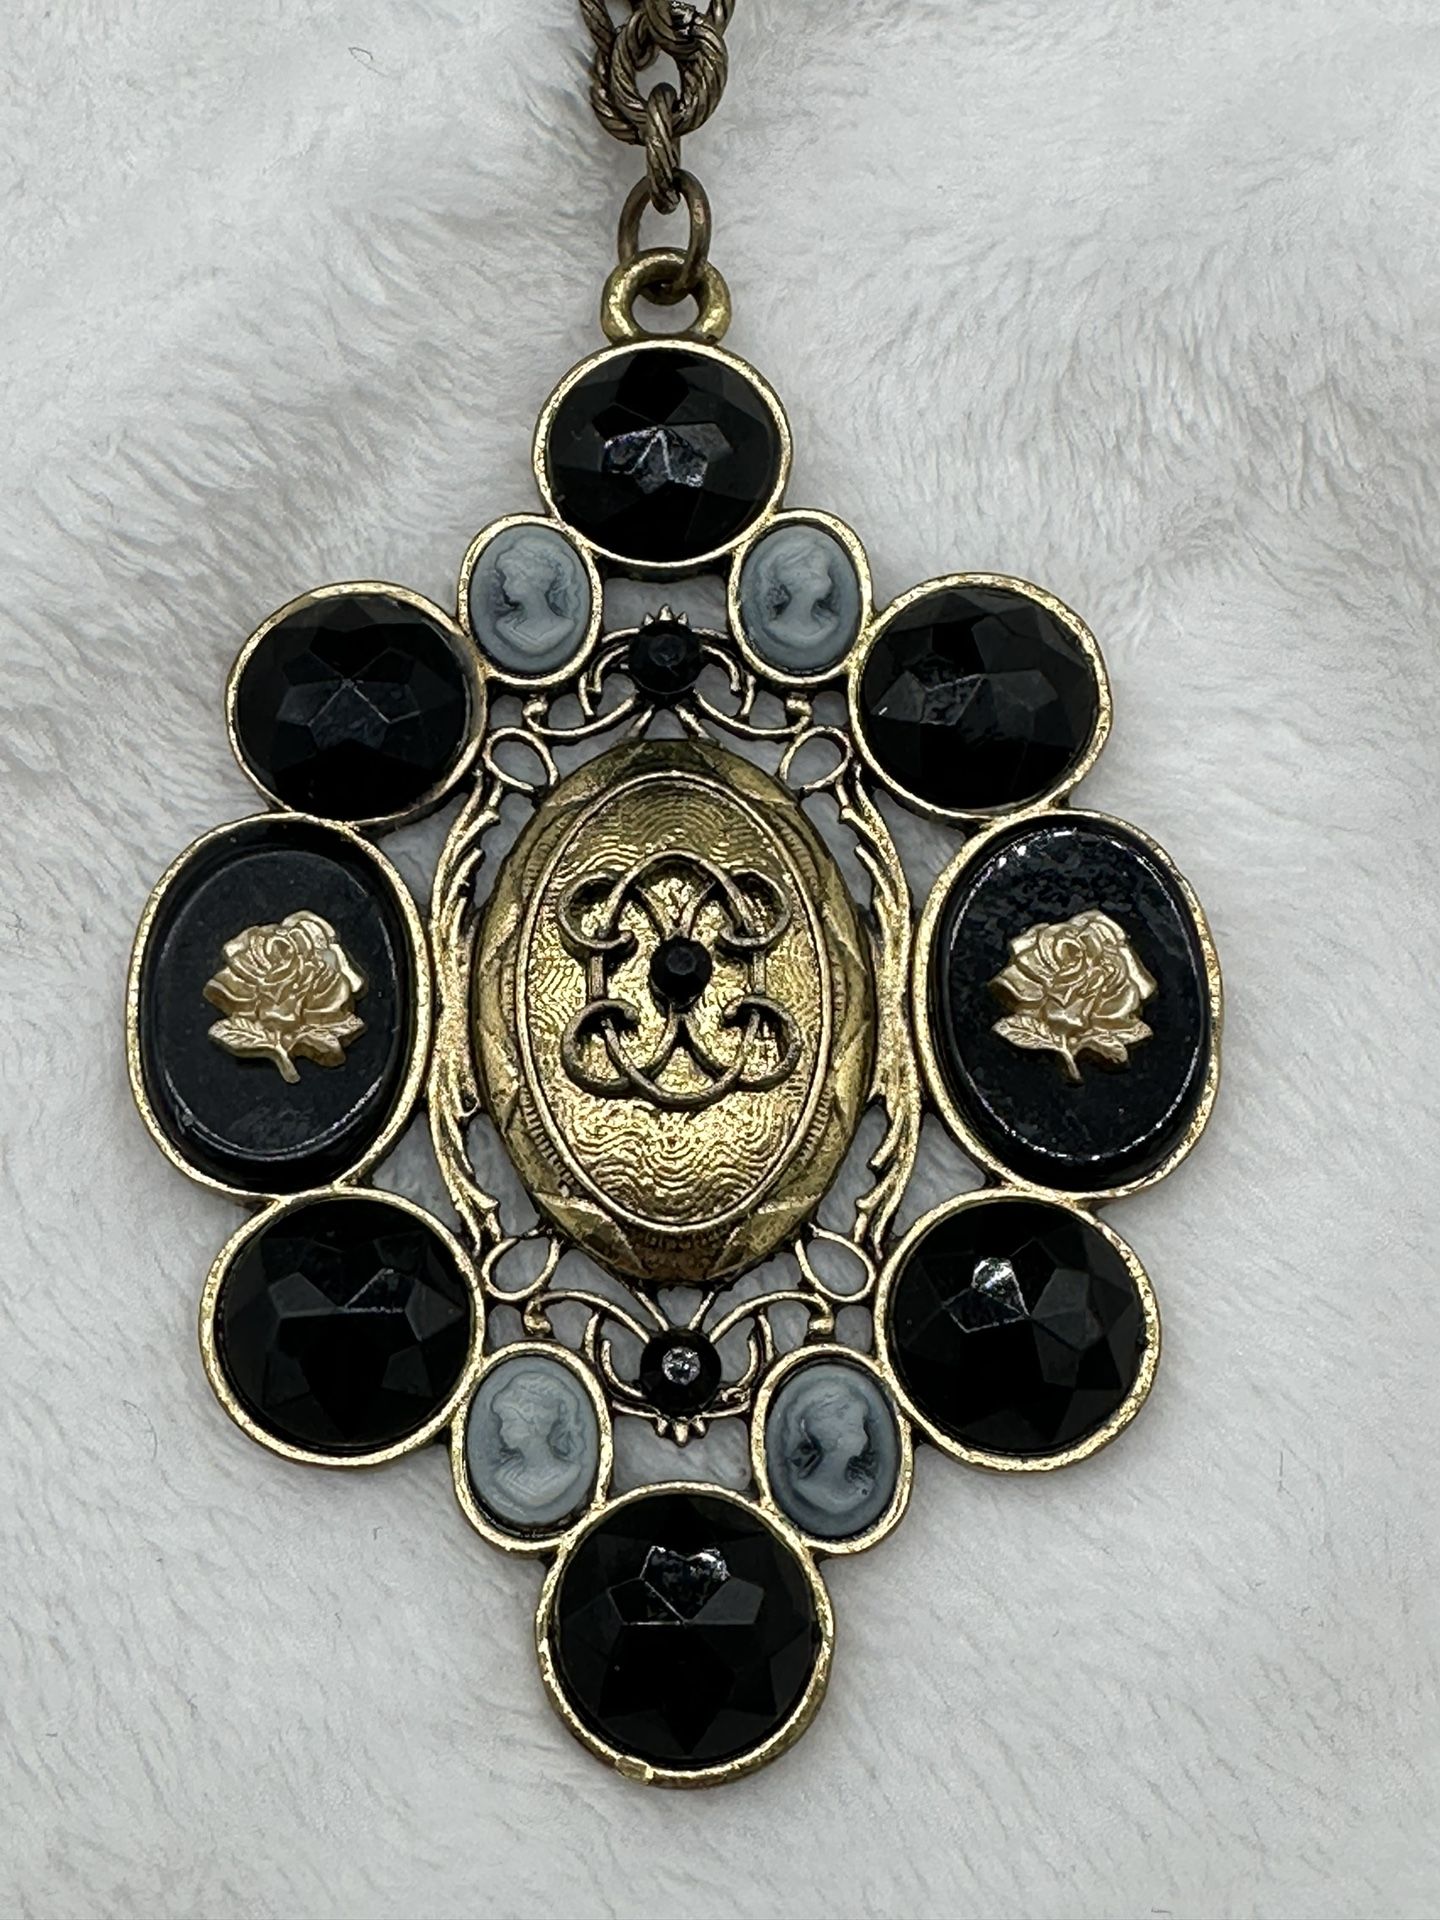 Vintage Huge Cameo Faux Onyx Diamond Shaped Pendant 4” X 2 3/4”  Necklace Rose & Rhinestones 32” Long Nice!